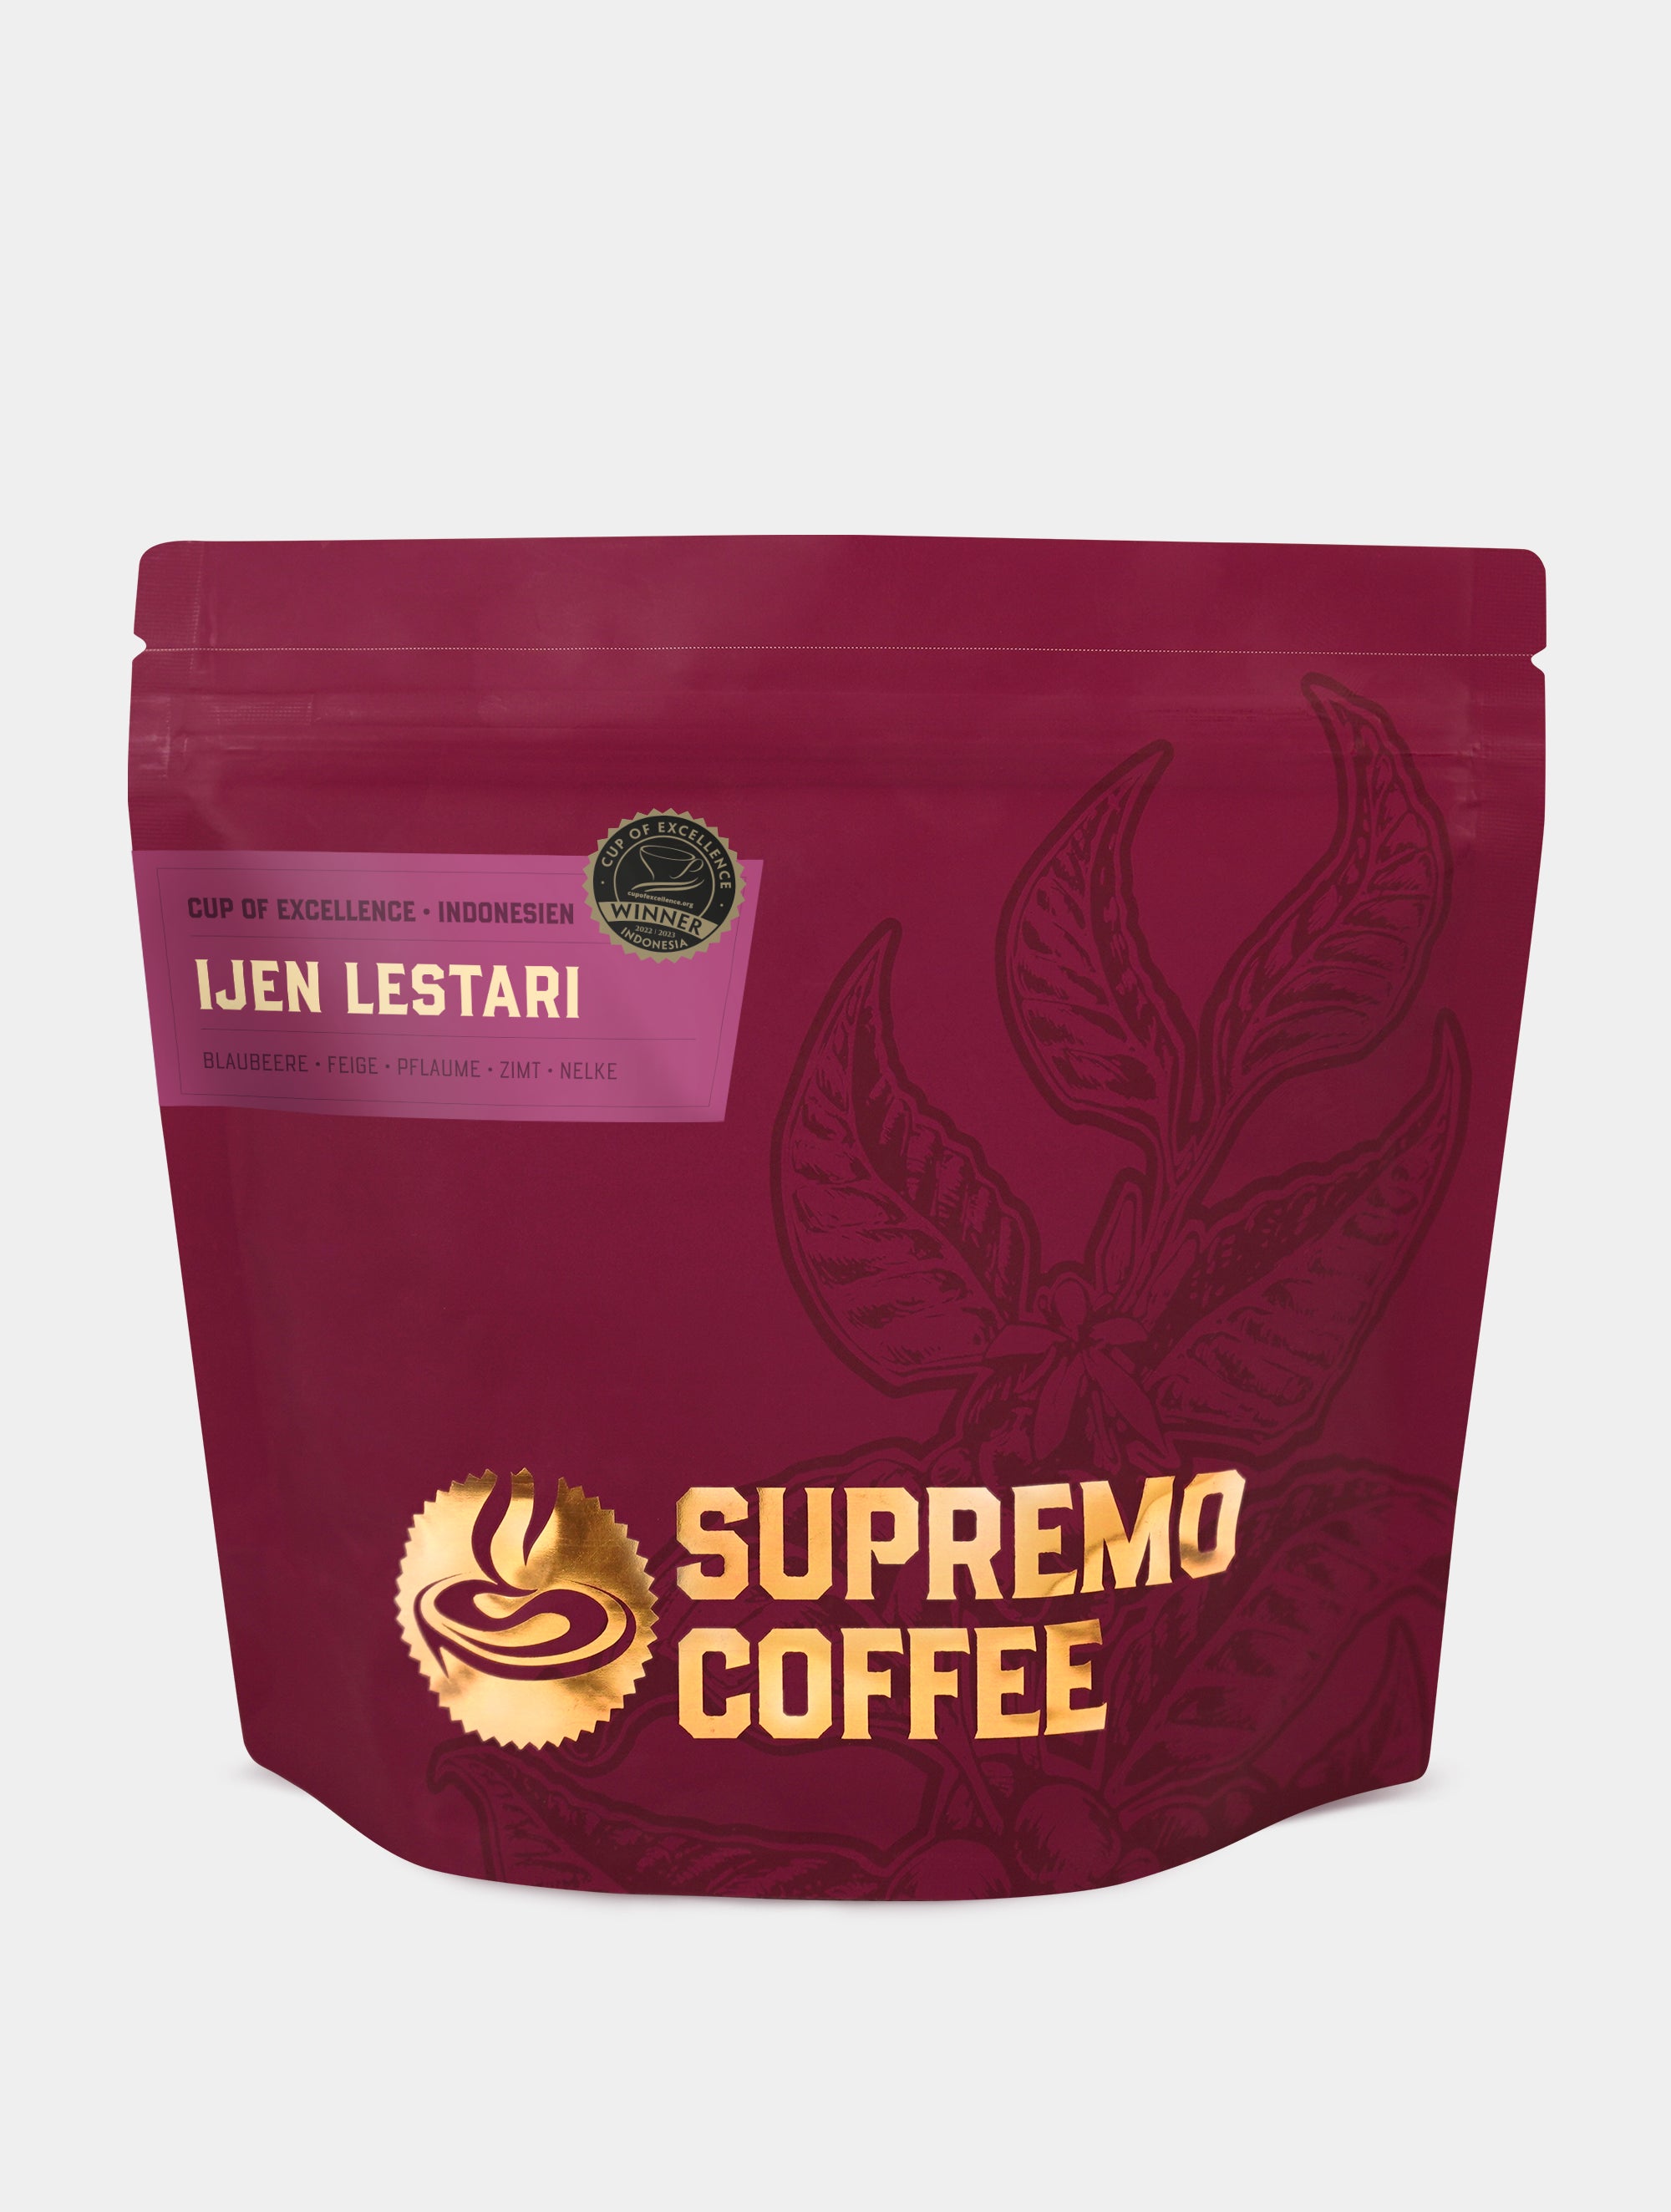 Ijen Lestari, Indonesien | SUPREMO Coffee